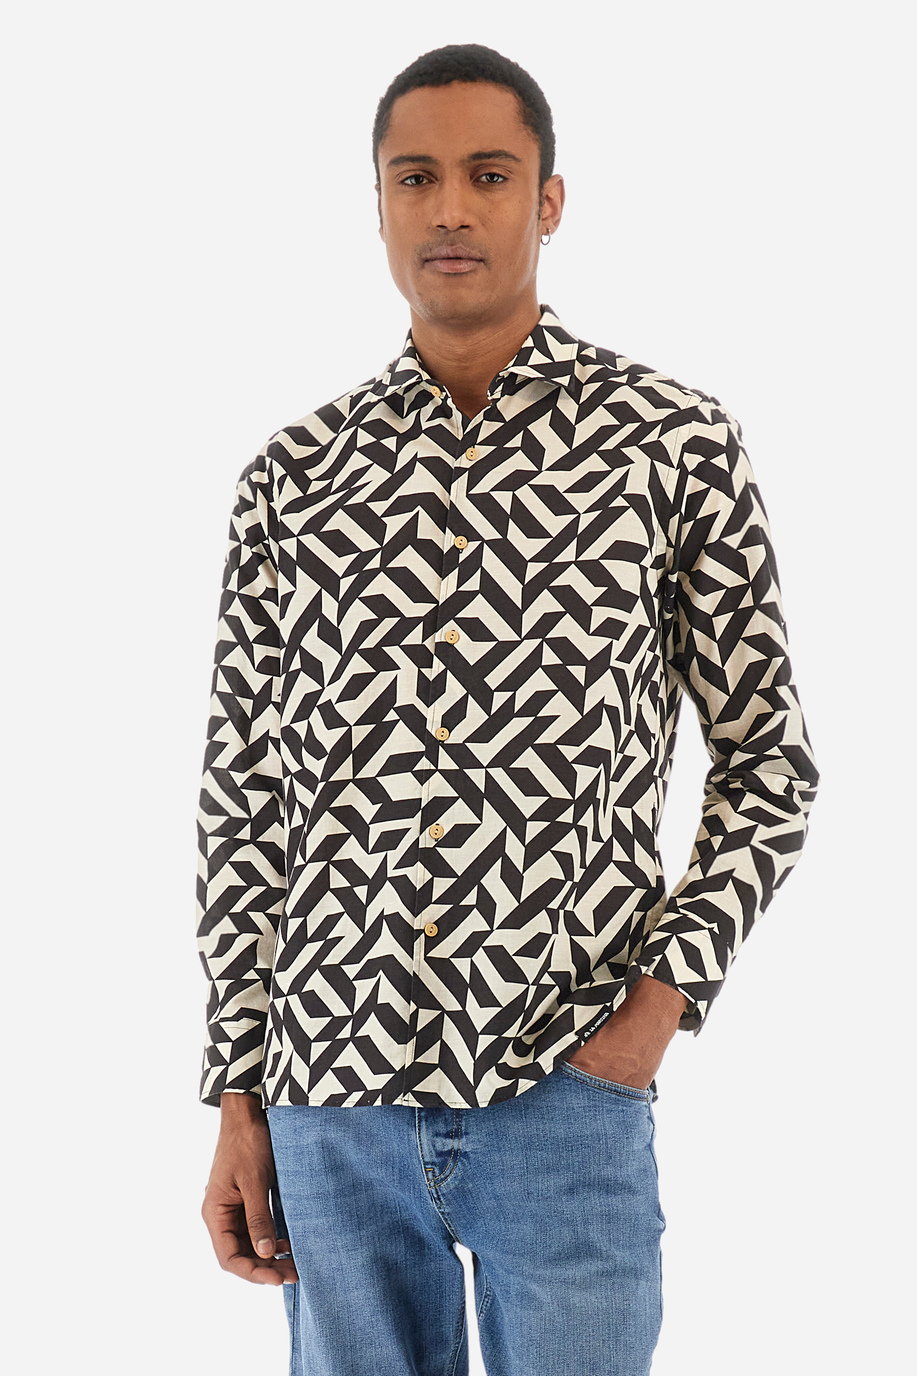 Patterned cotton and linen shirt - Innocent - Shirts | La Martina - Official Online Shop